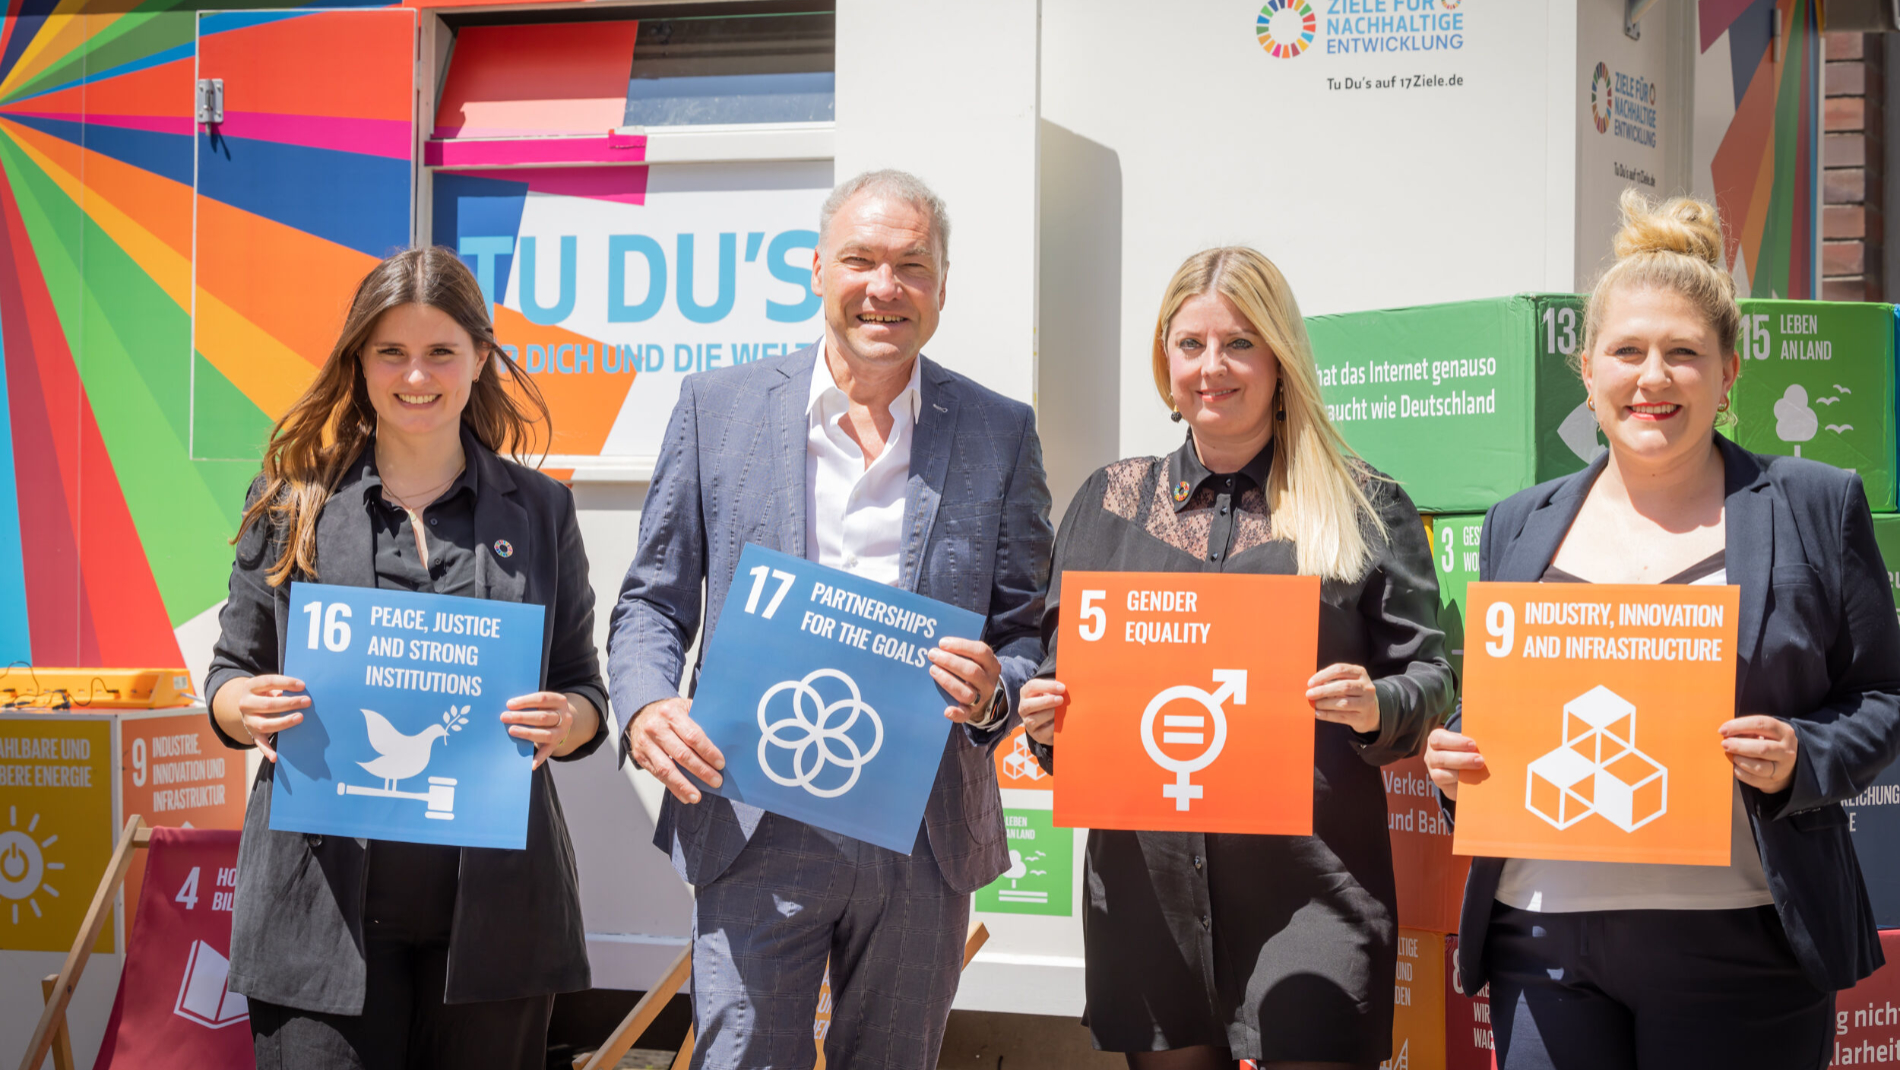 Sustainable Development Goals (SDGs): Kristina Löhr (Engagement Global), Olaf Schmidt (Messe Frankfurt), Kerry Bannigan (Fashion Impact Fund), Stephanie Wüst (Stadträtin Frankfurt)